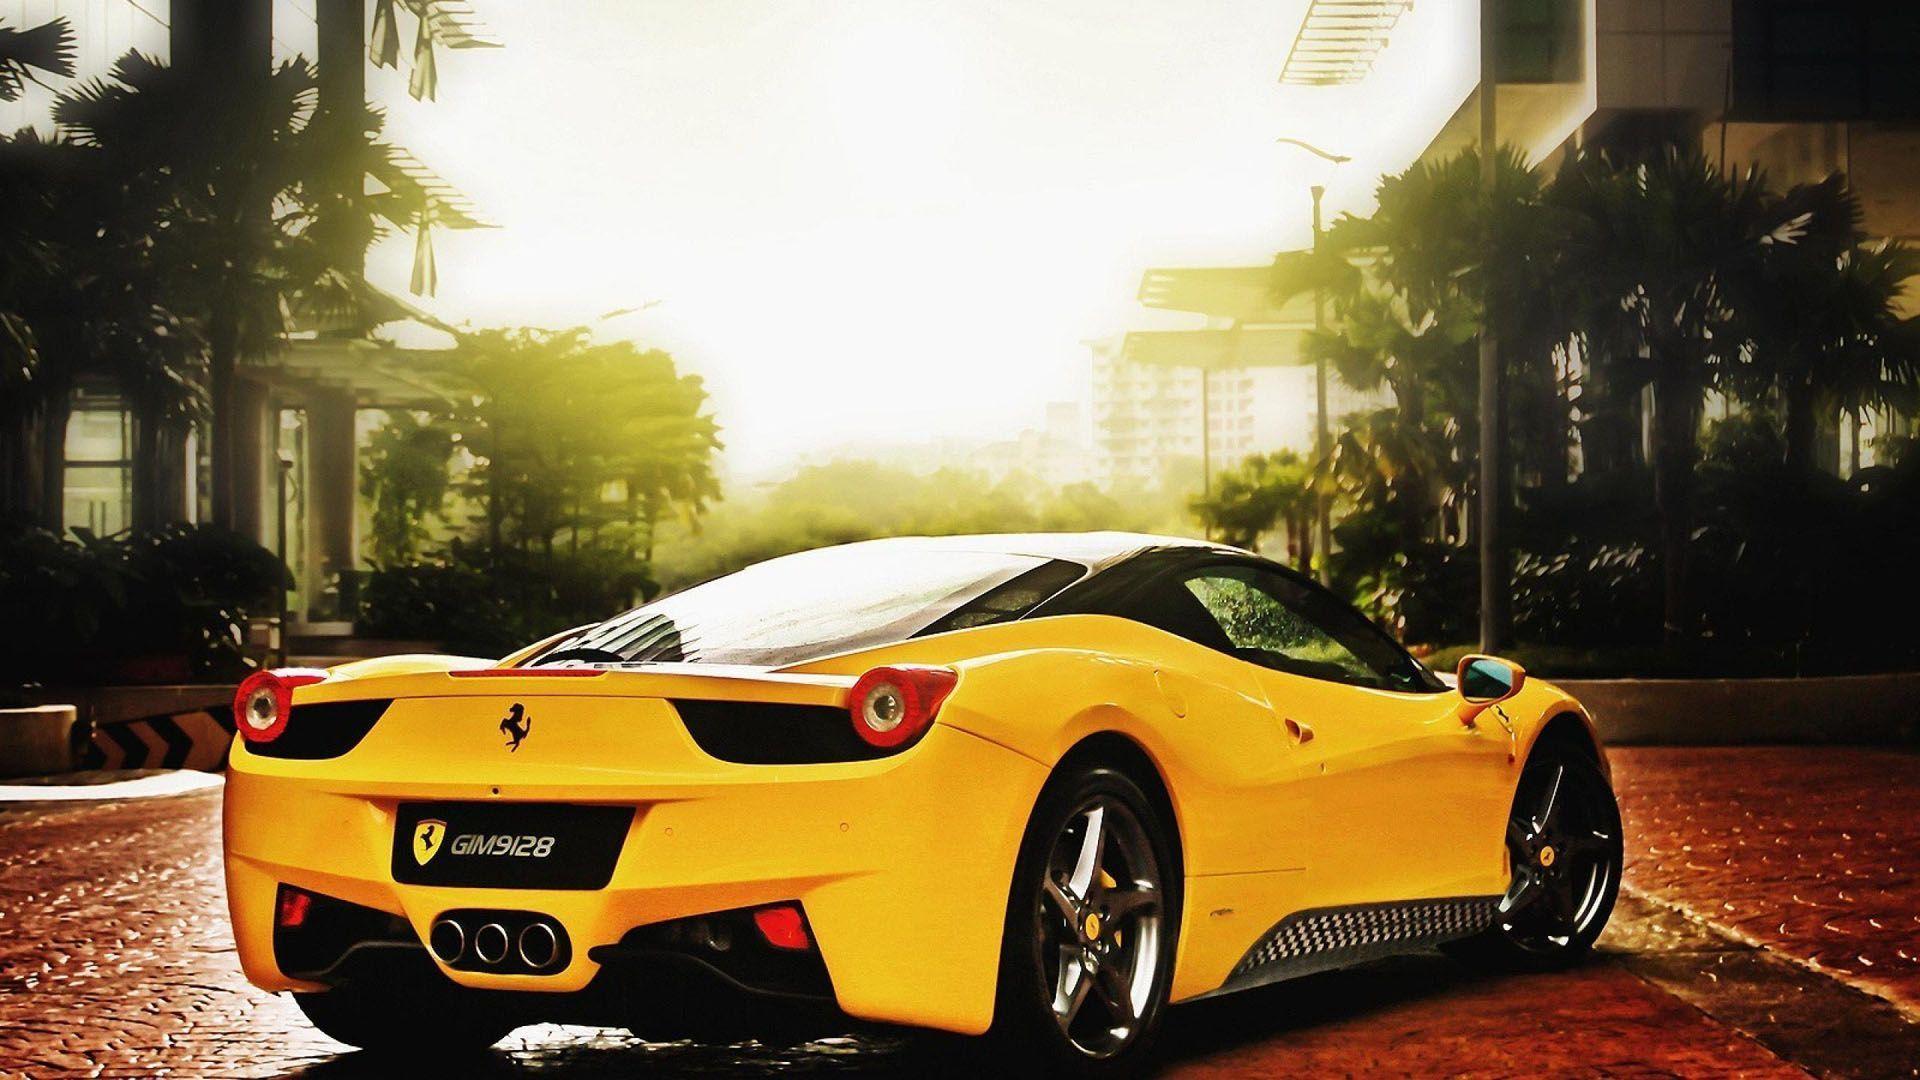 Download Ferrari Free Awesome Yellow Ferrari Wallpaper. Full HD